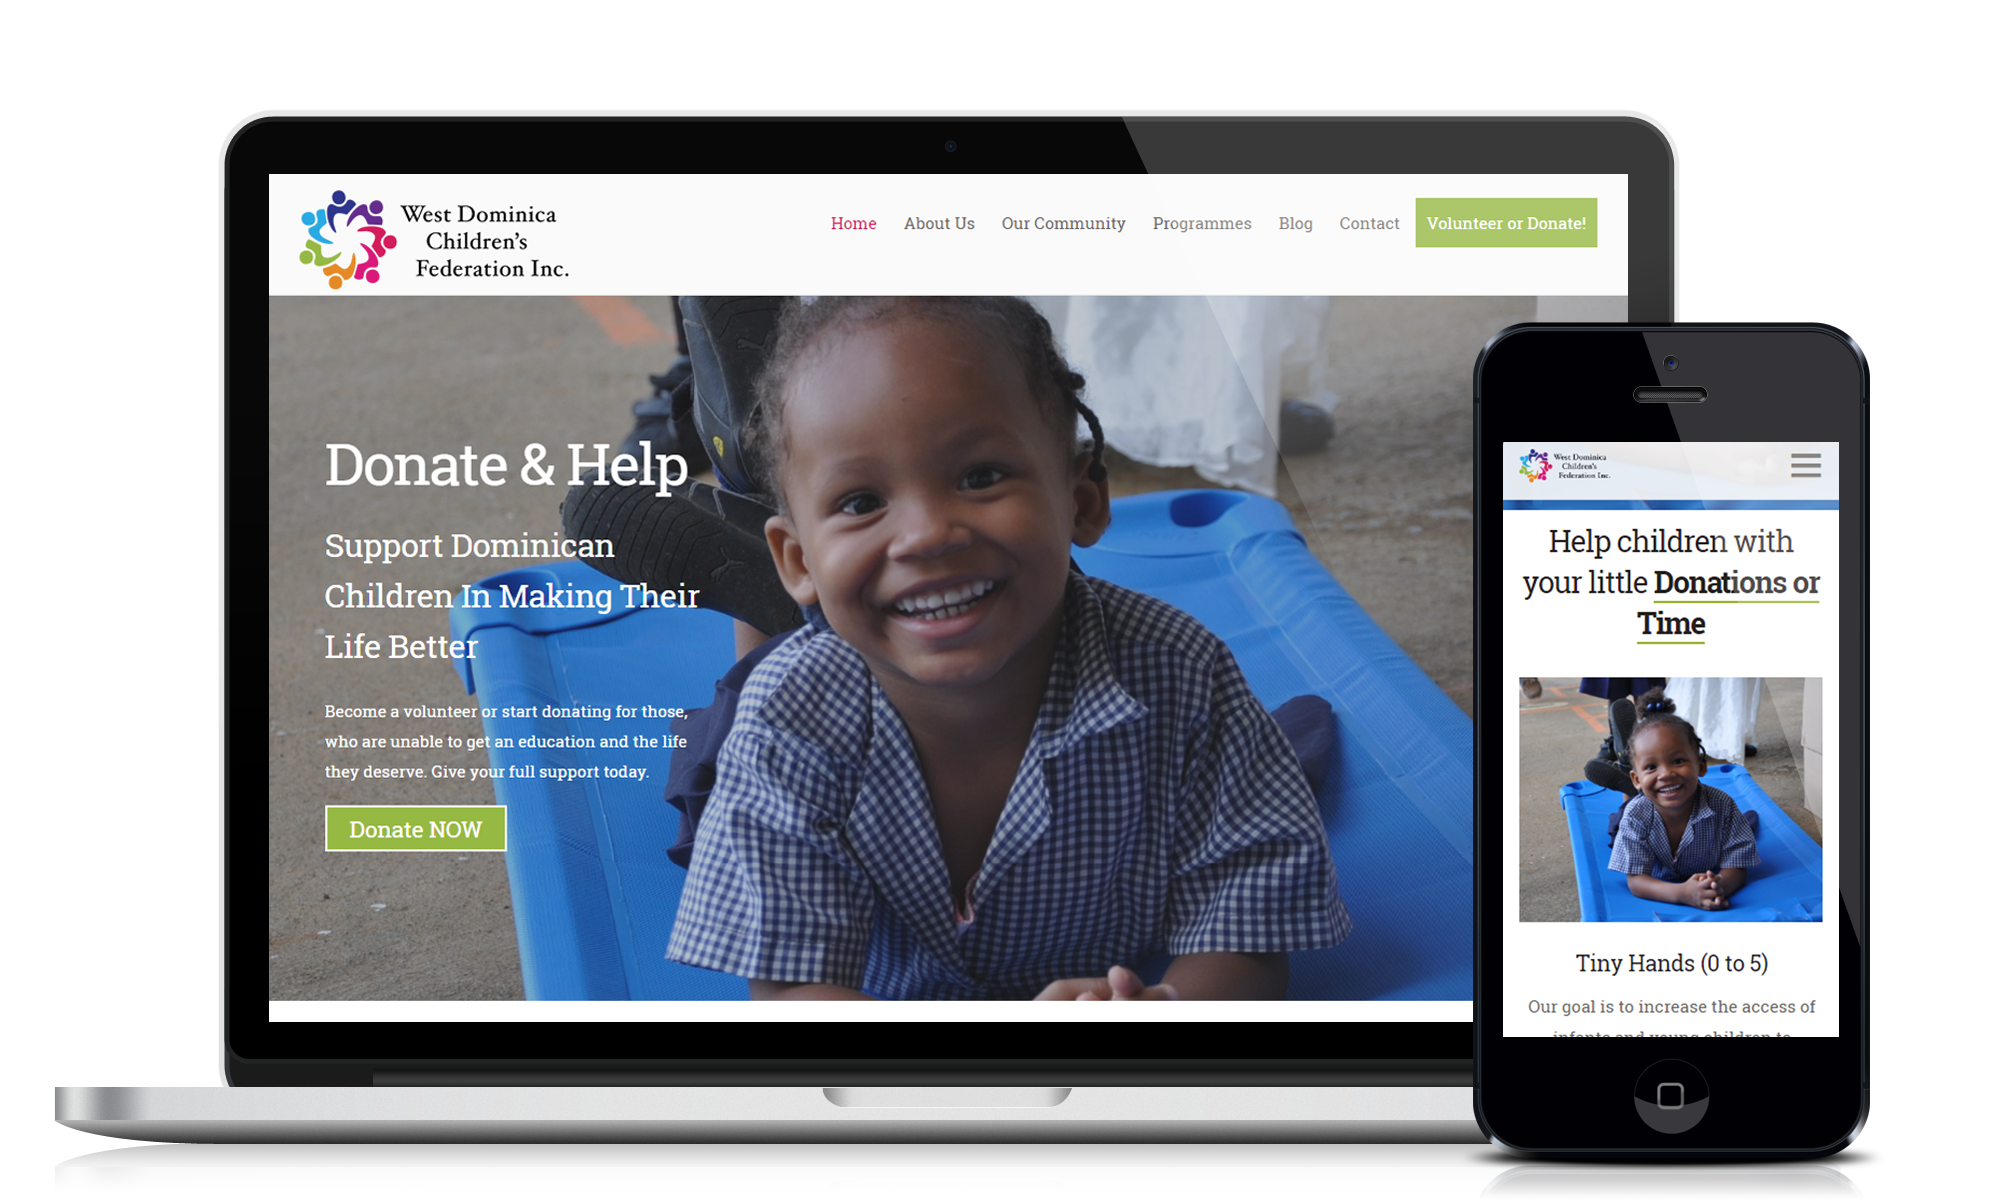 Website design and development service for customer West Dominica Children's Federation